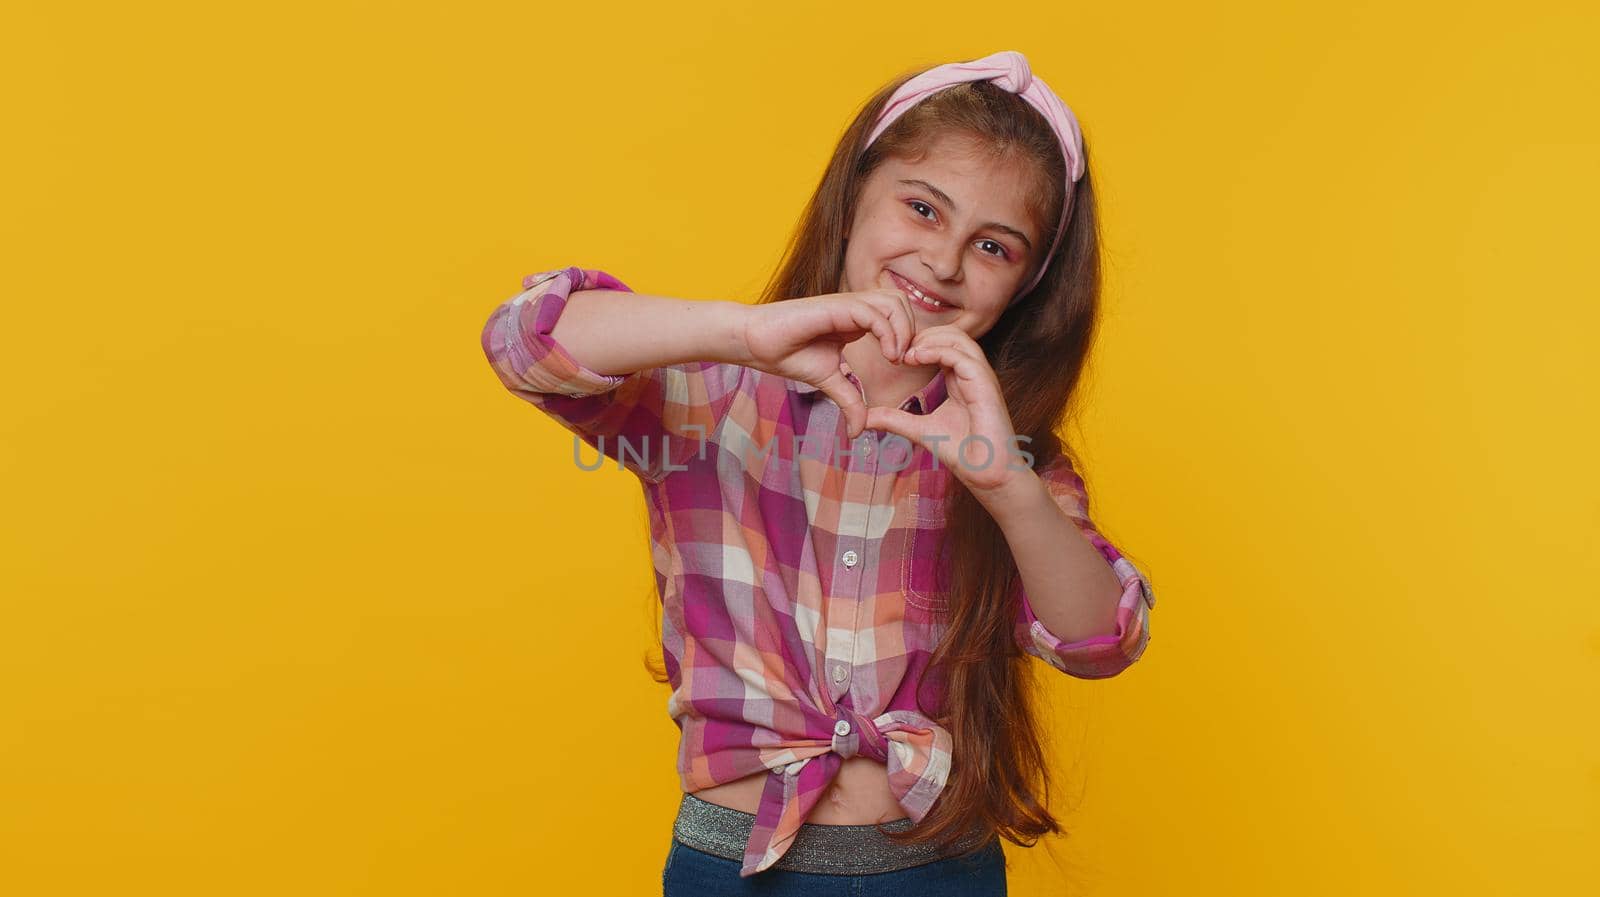 Smiling preteen child girl kid makes heart gesture demonstrates love sign expresses good feelings by efuror